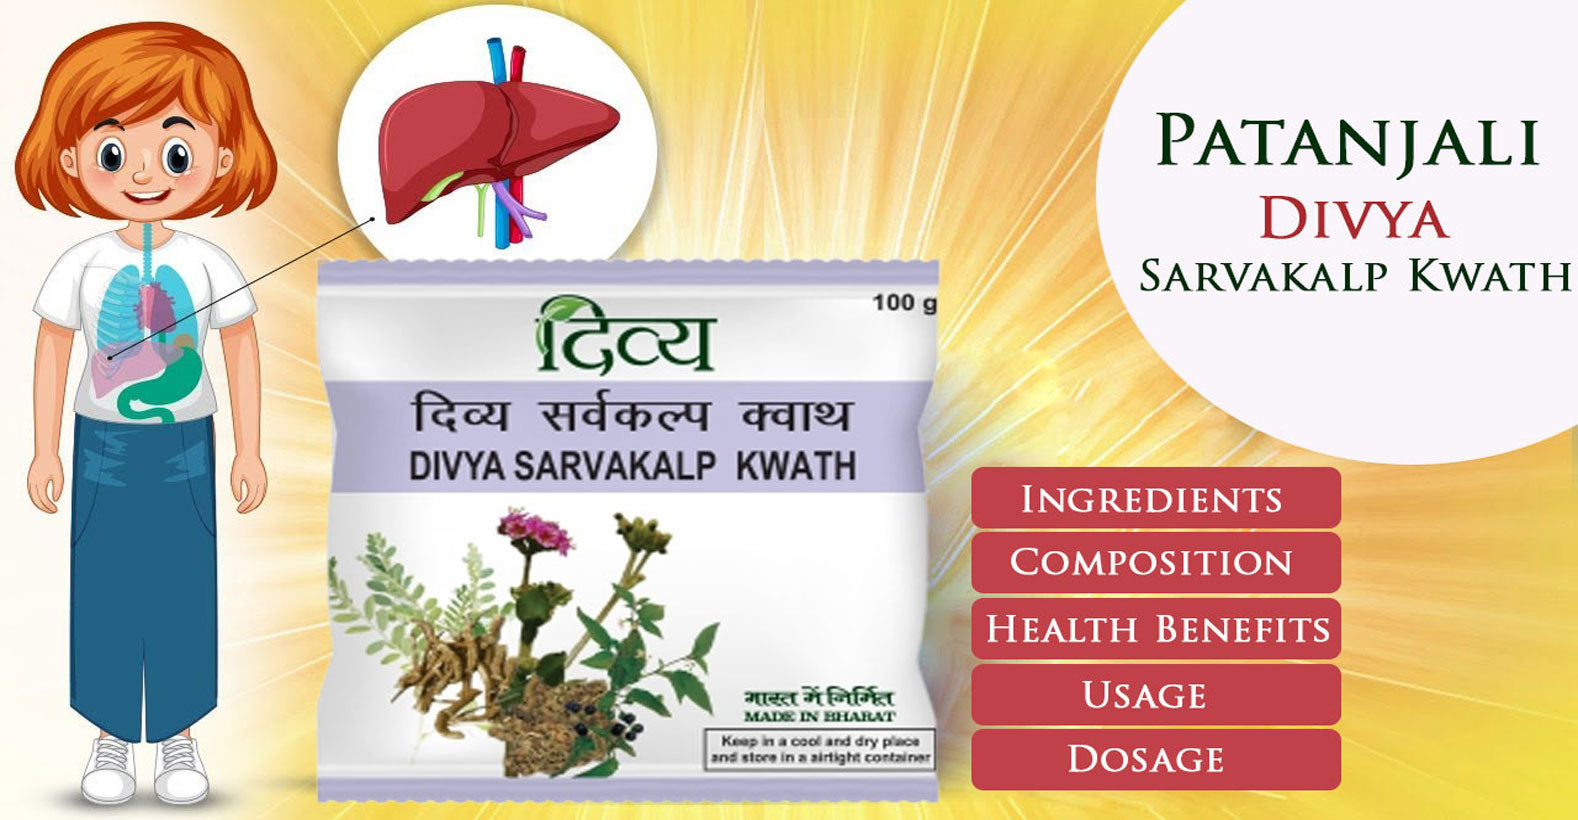 Patanjali Divya Sarvakalp Kwath - Ingredients, Composition, Health Benefits, Usage